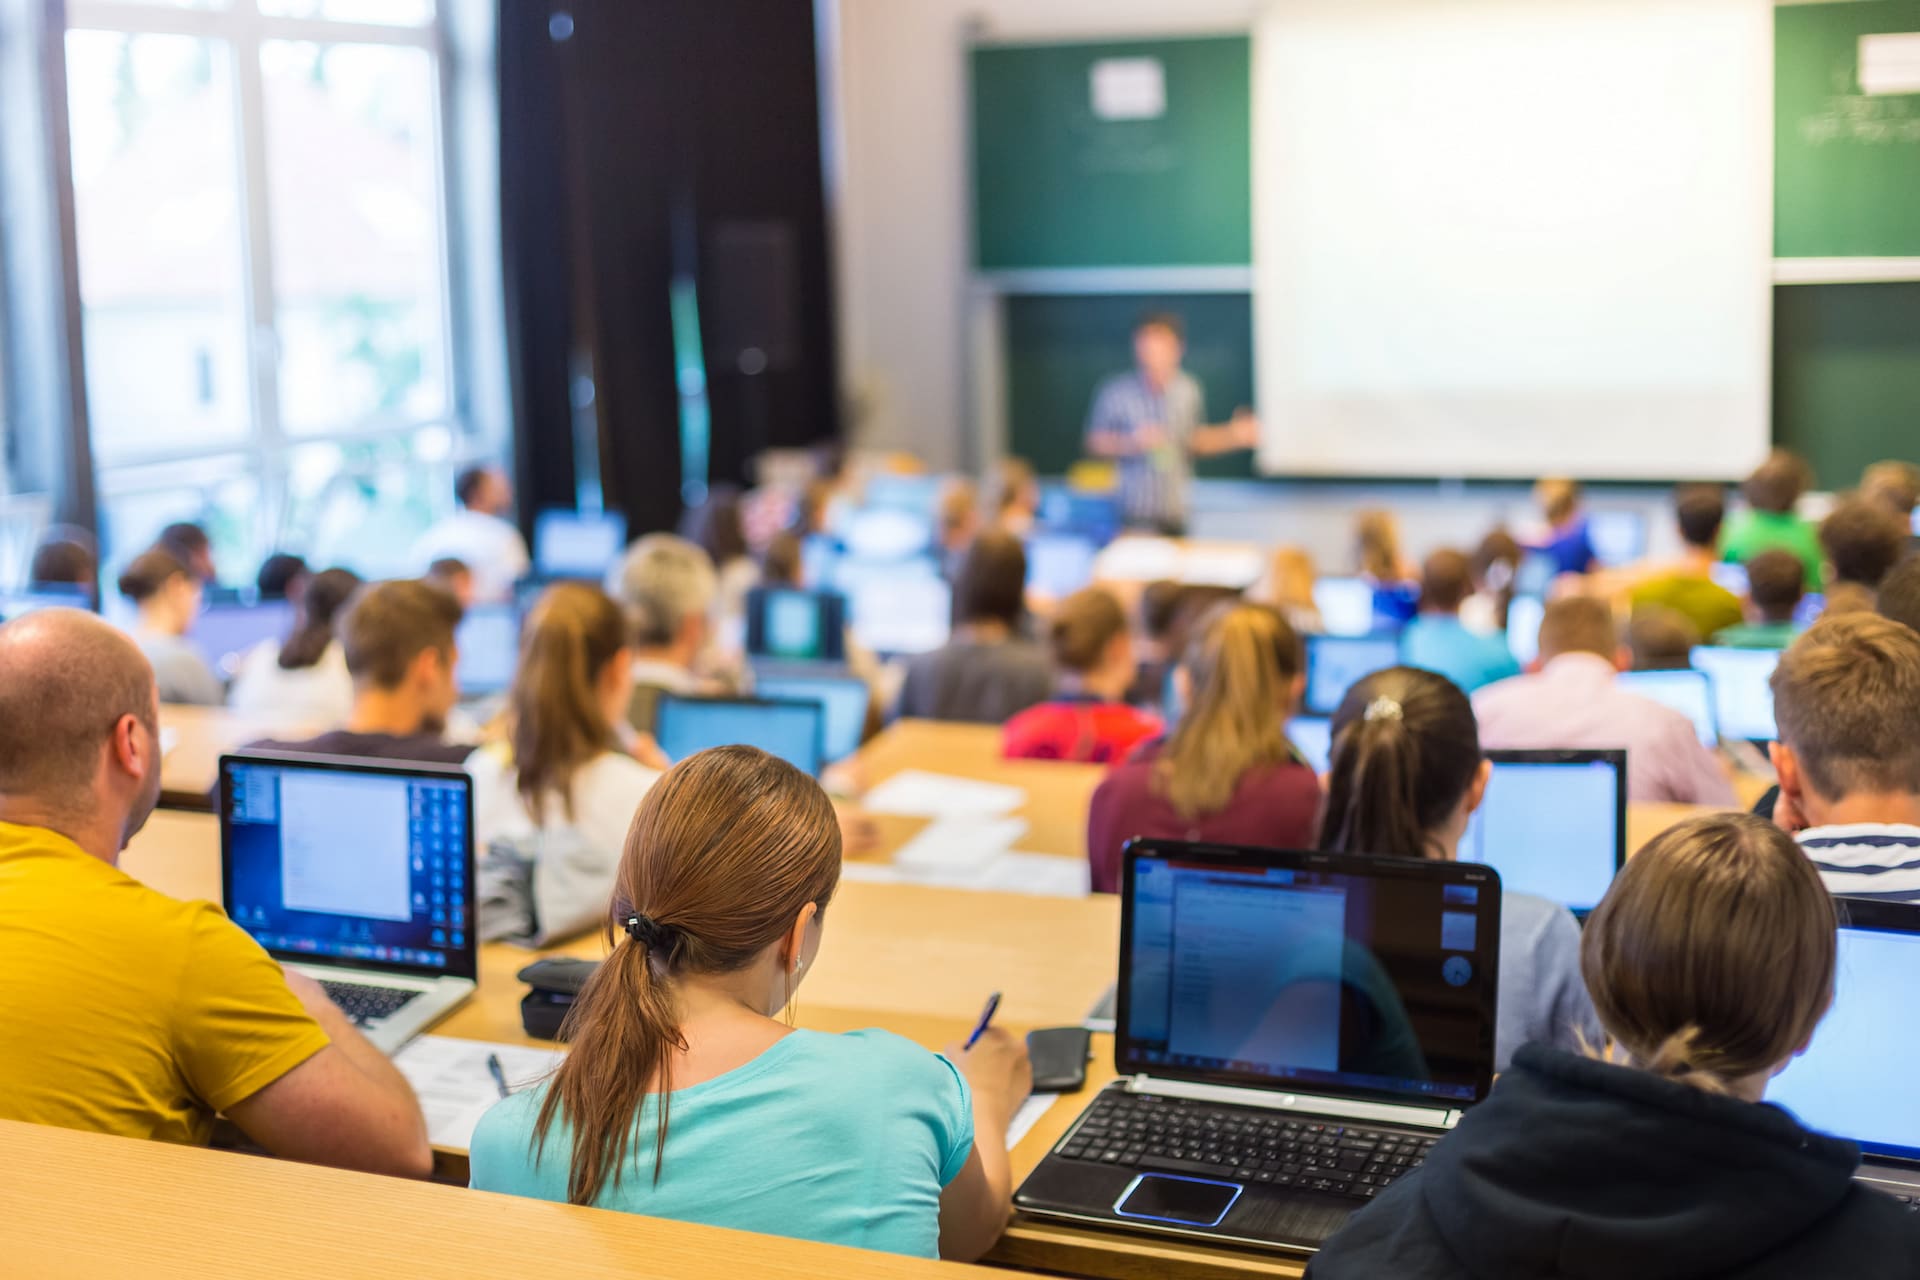 students in university using laptops